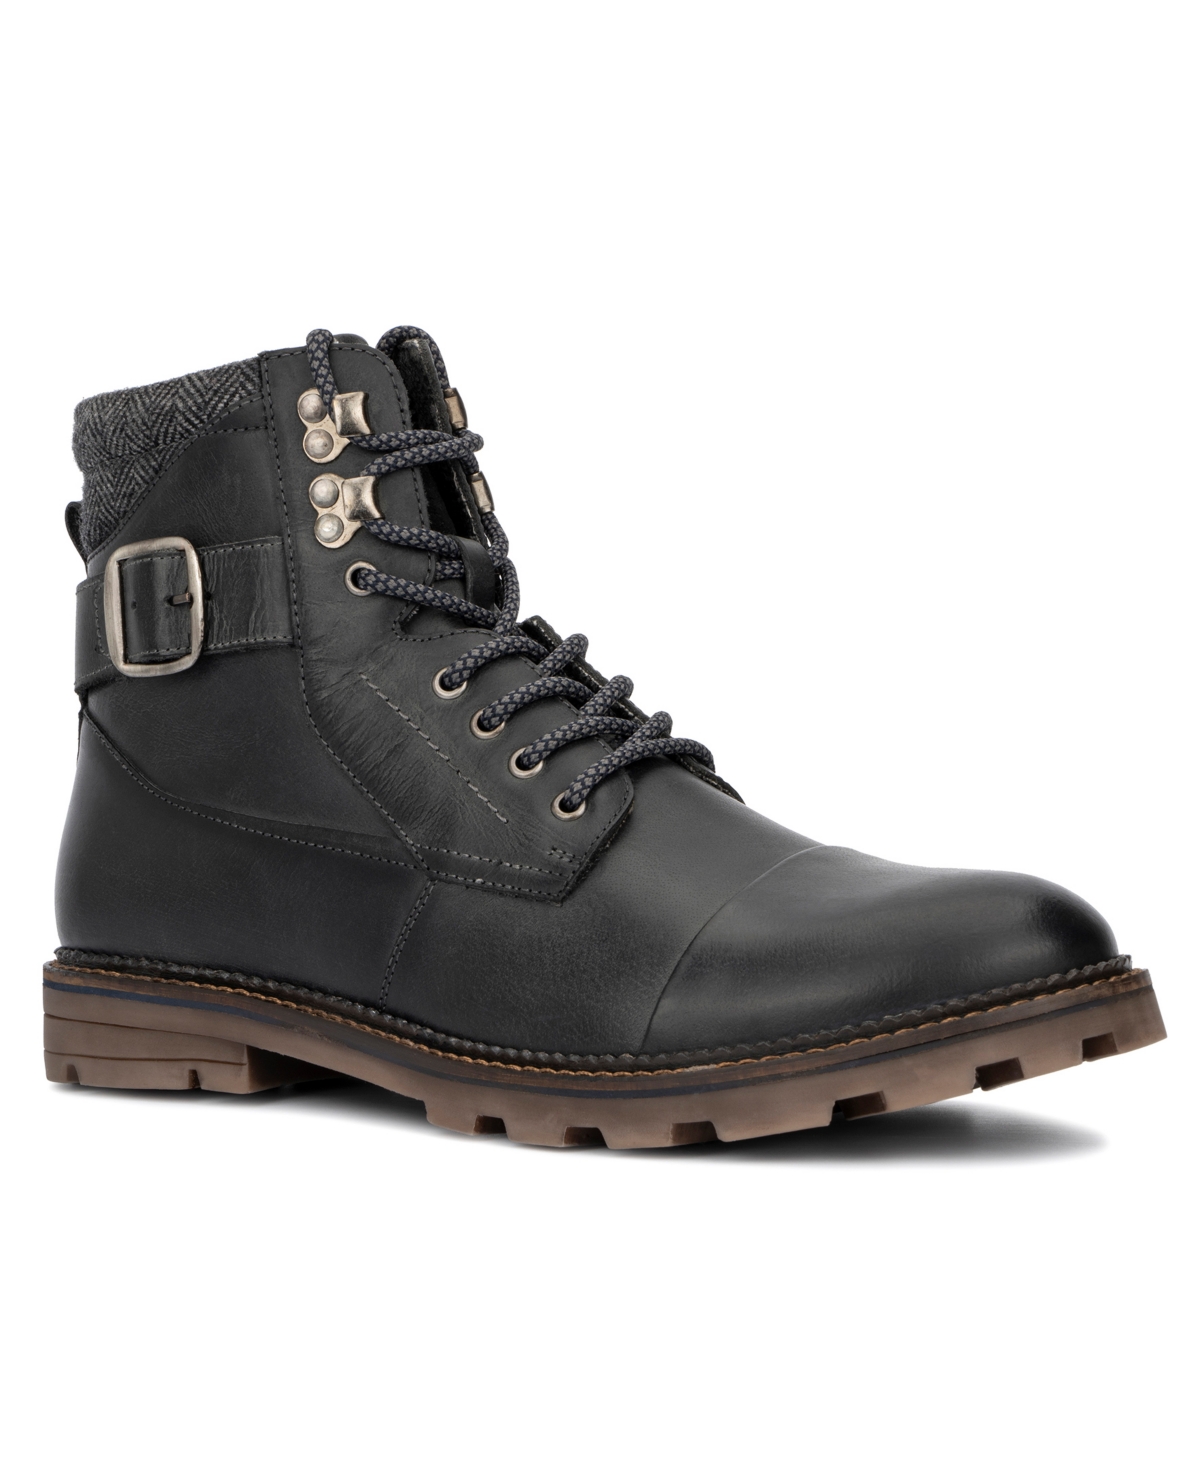 Men's Legacy Leather Boots - Black